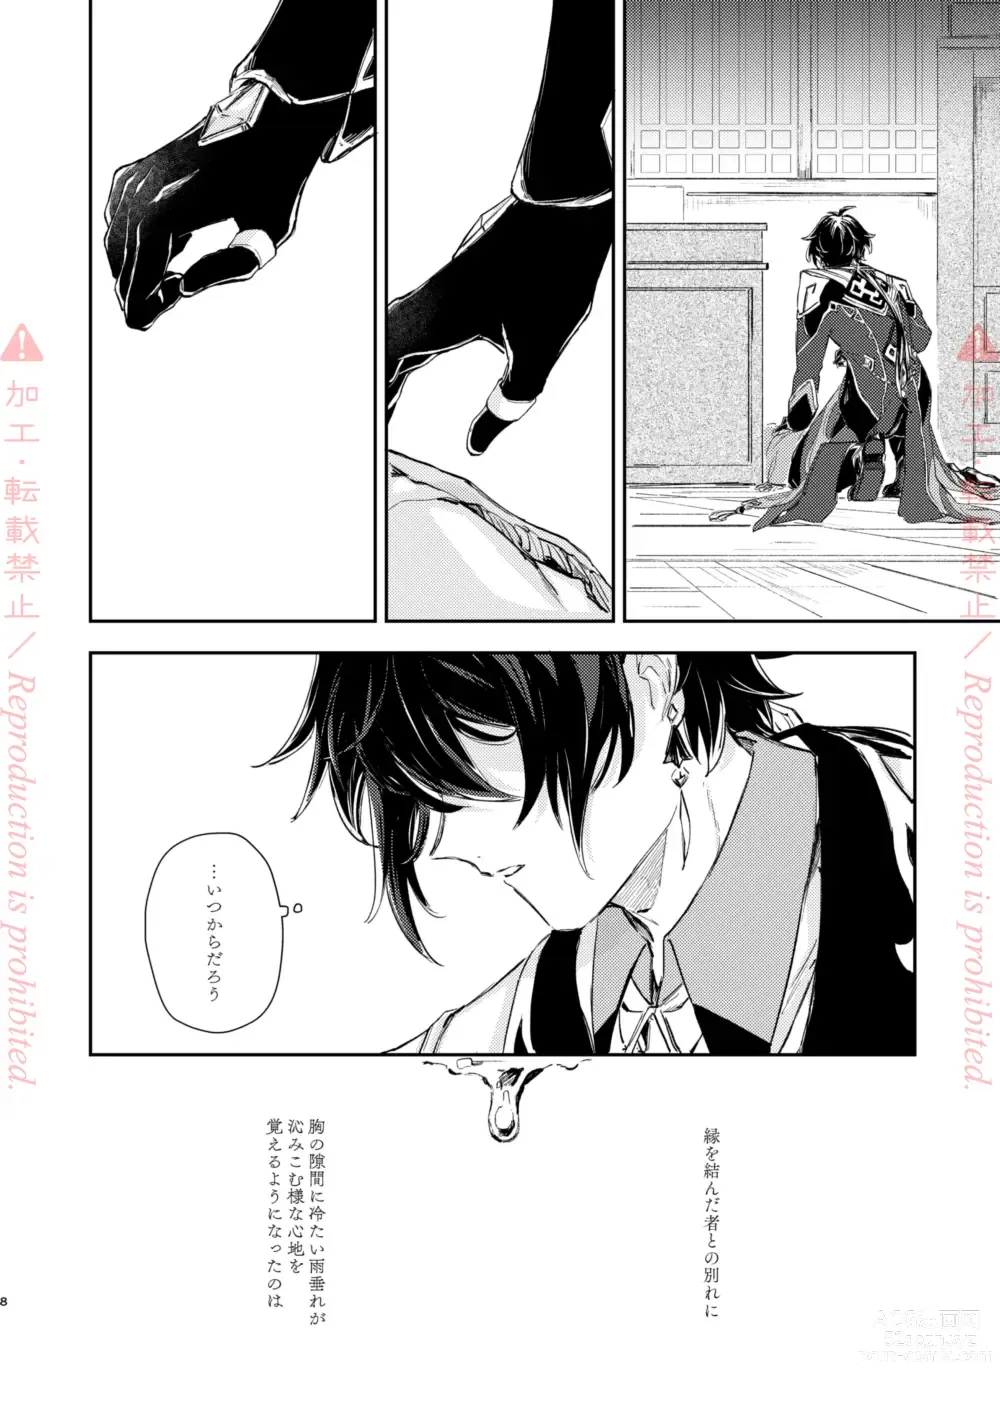 Page 7 of doujinshi Hatsuro